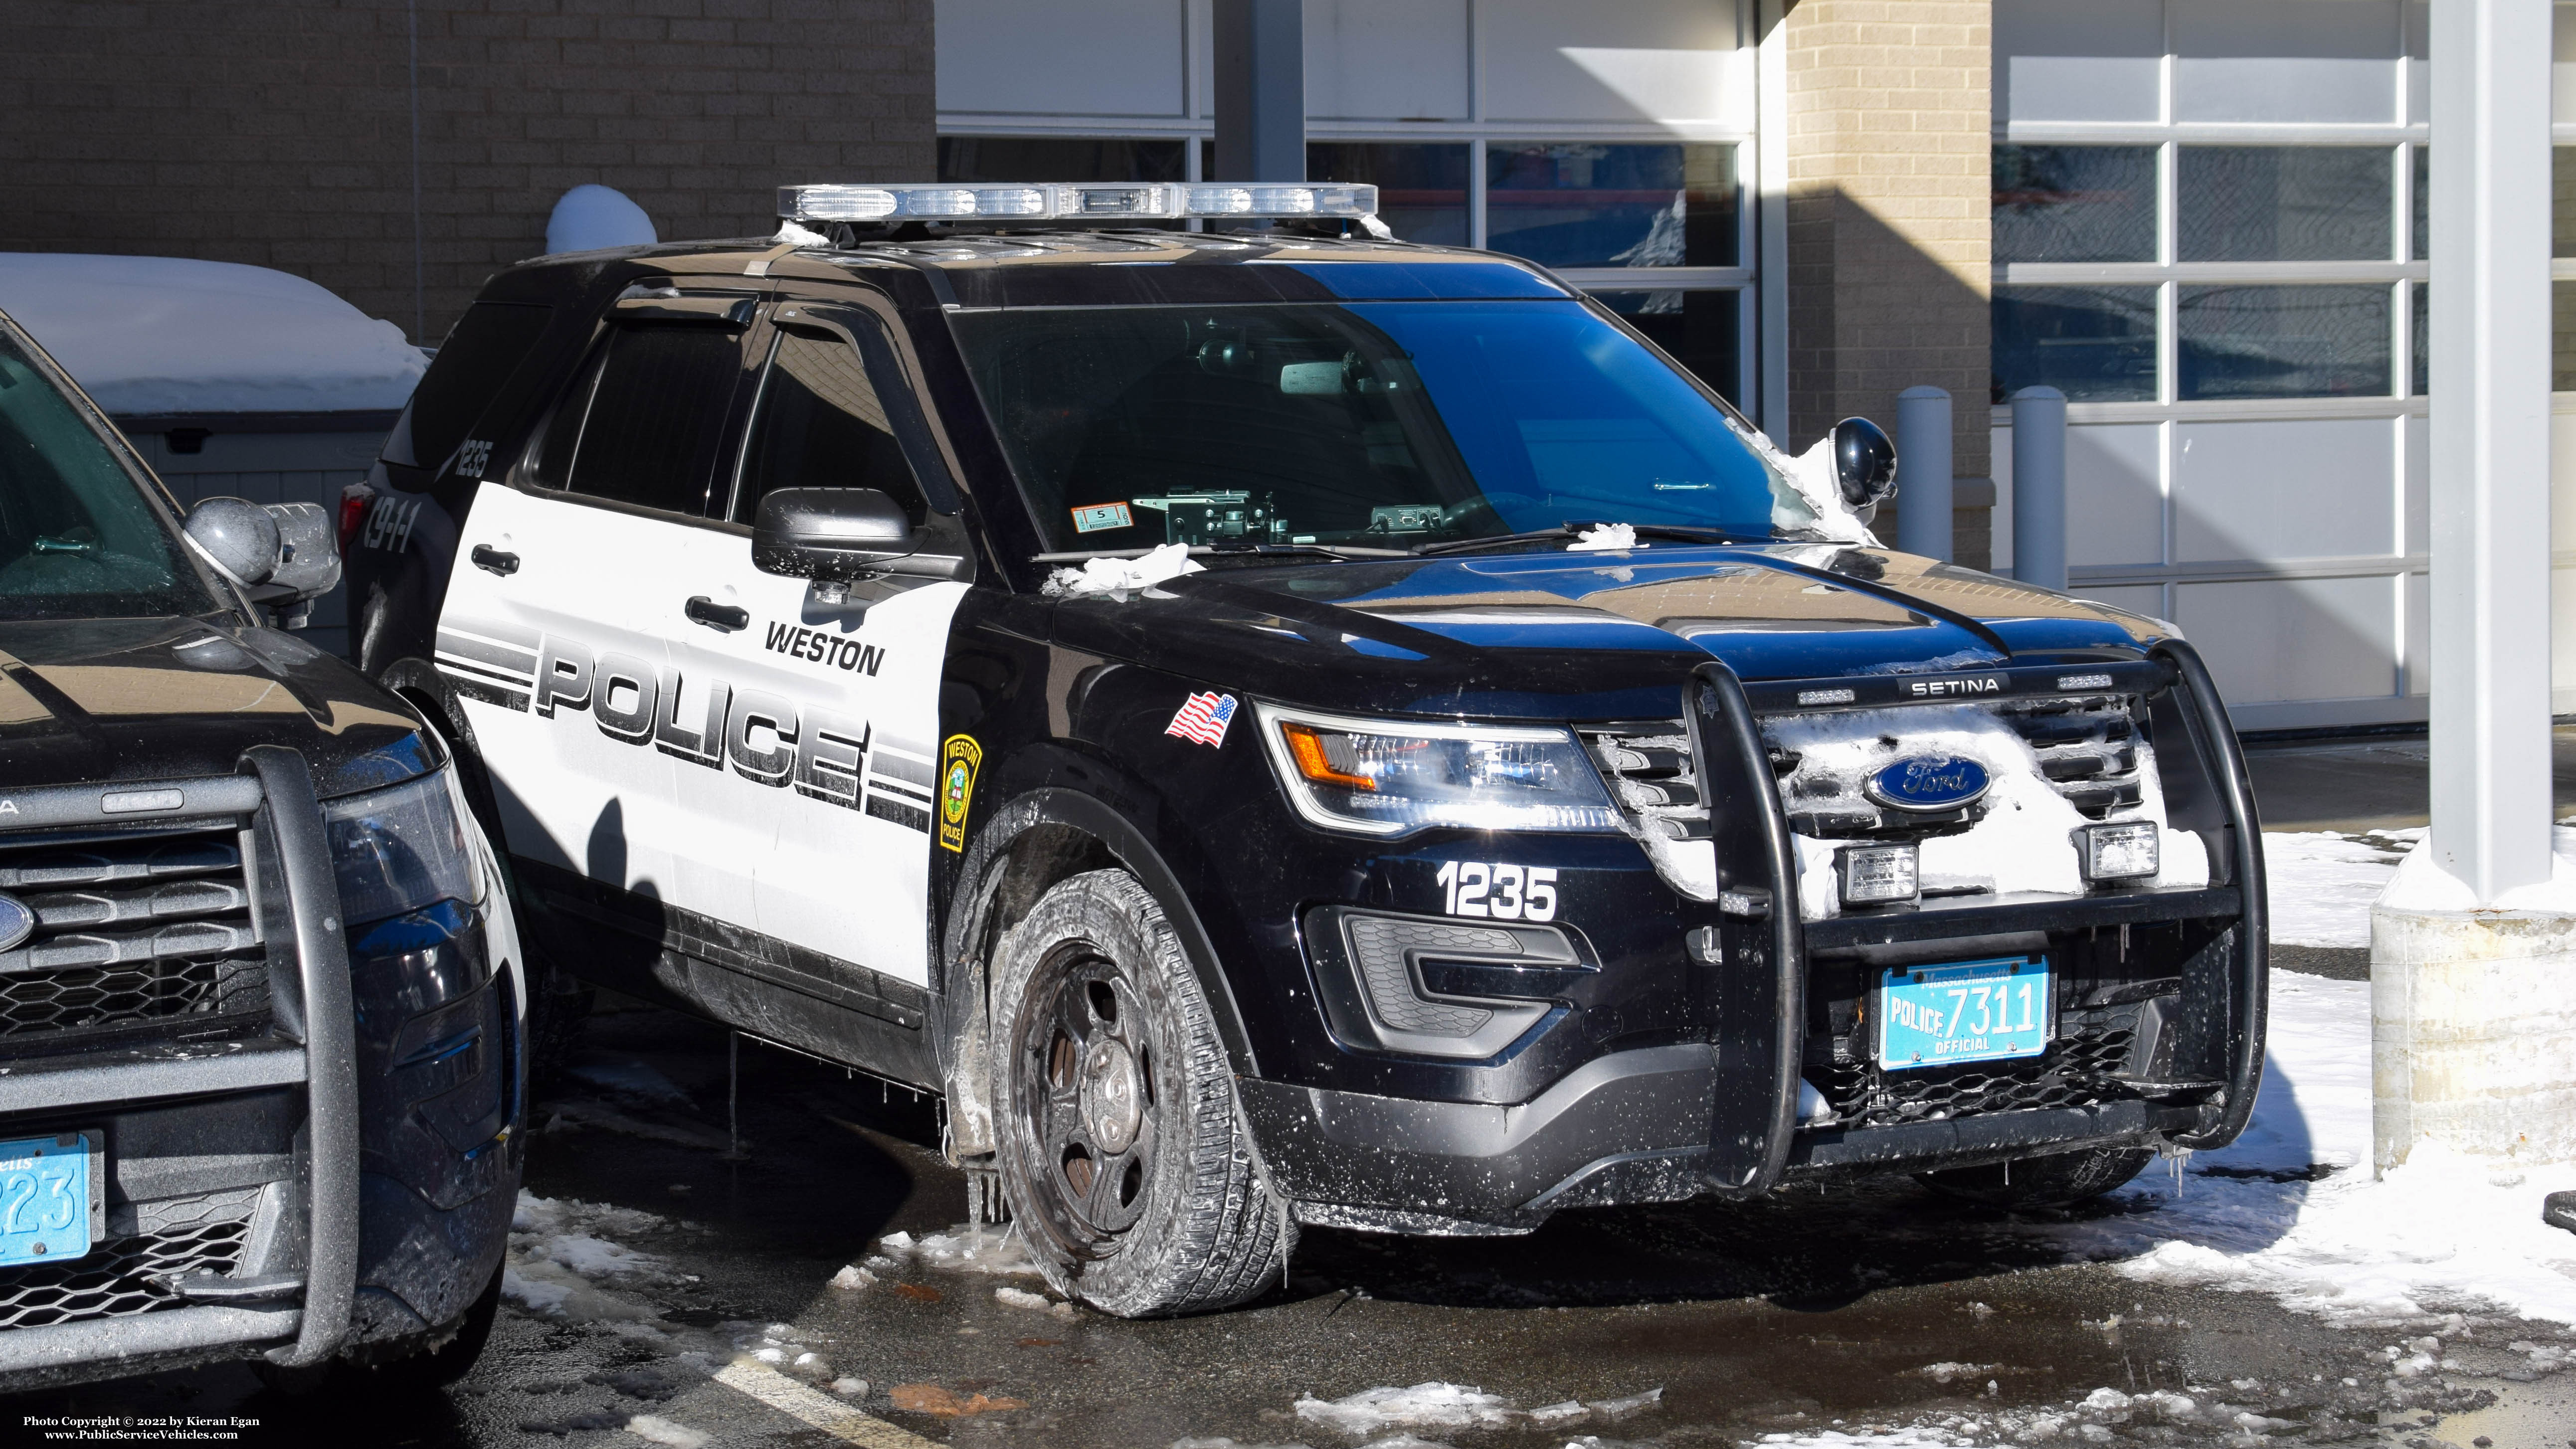 A photo  of Weston Police
            Cruiser 1235, a 2019 Ford Police Interceptor Utility             taken by Kieran Egan